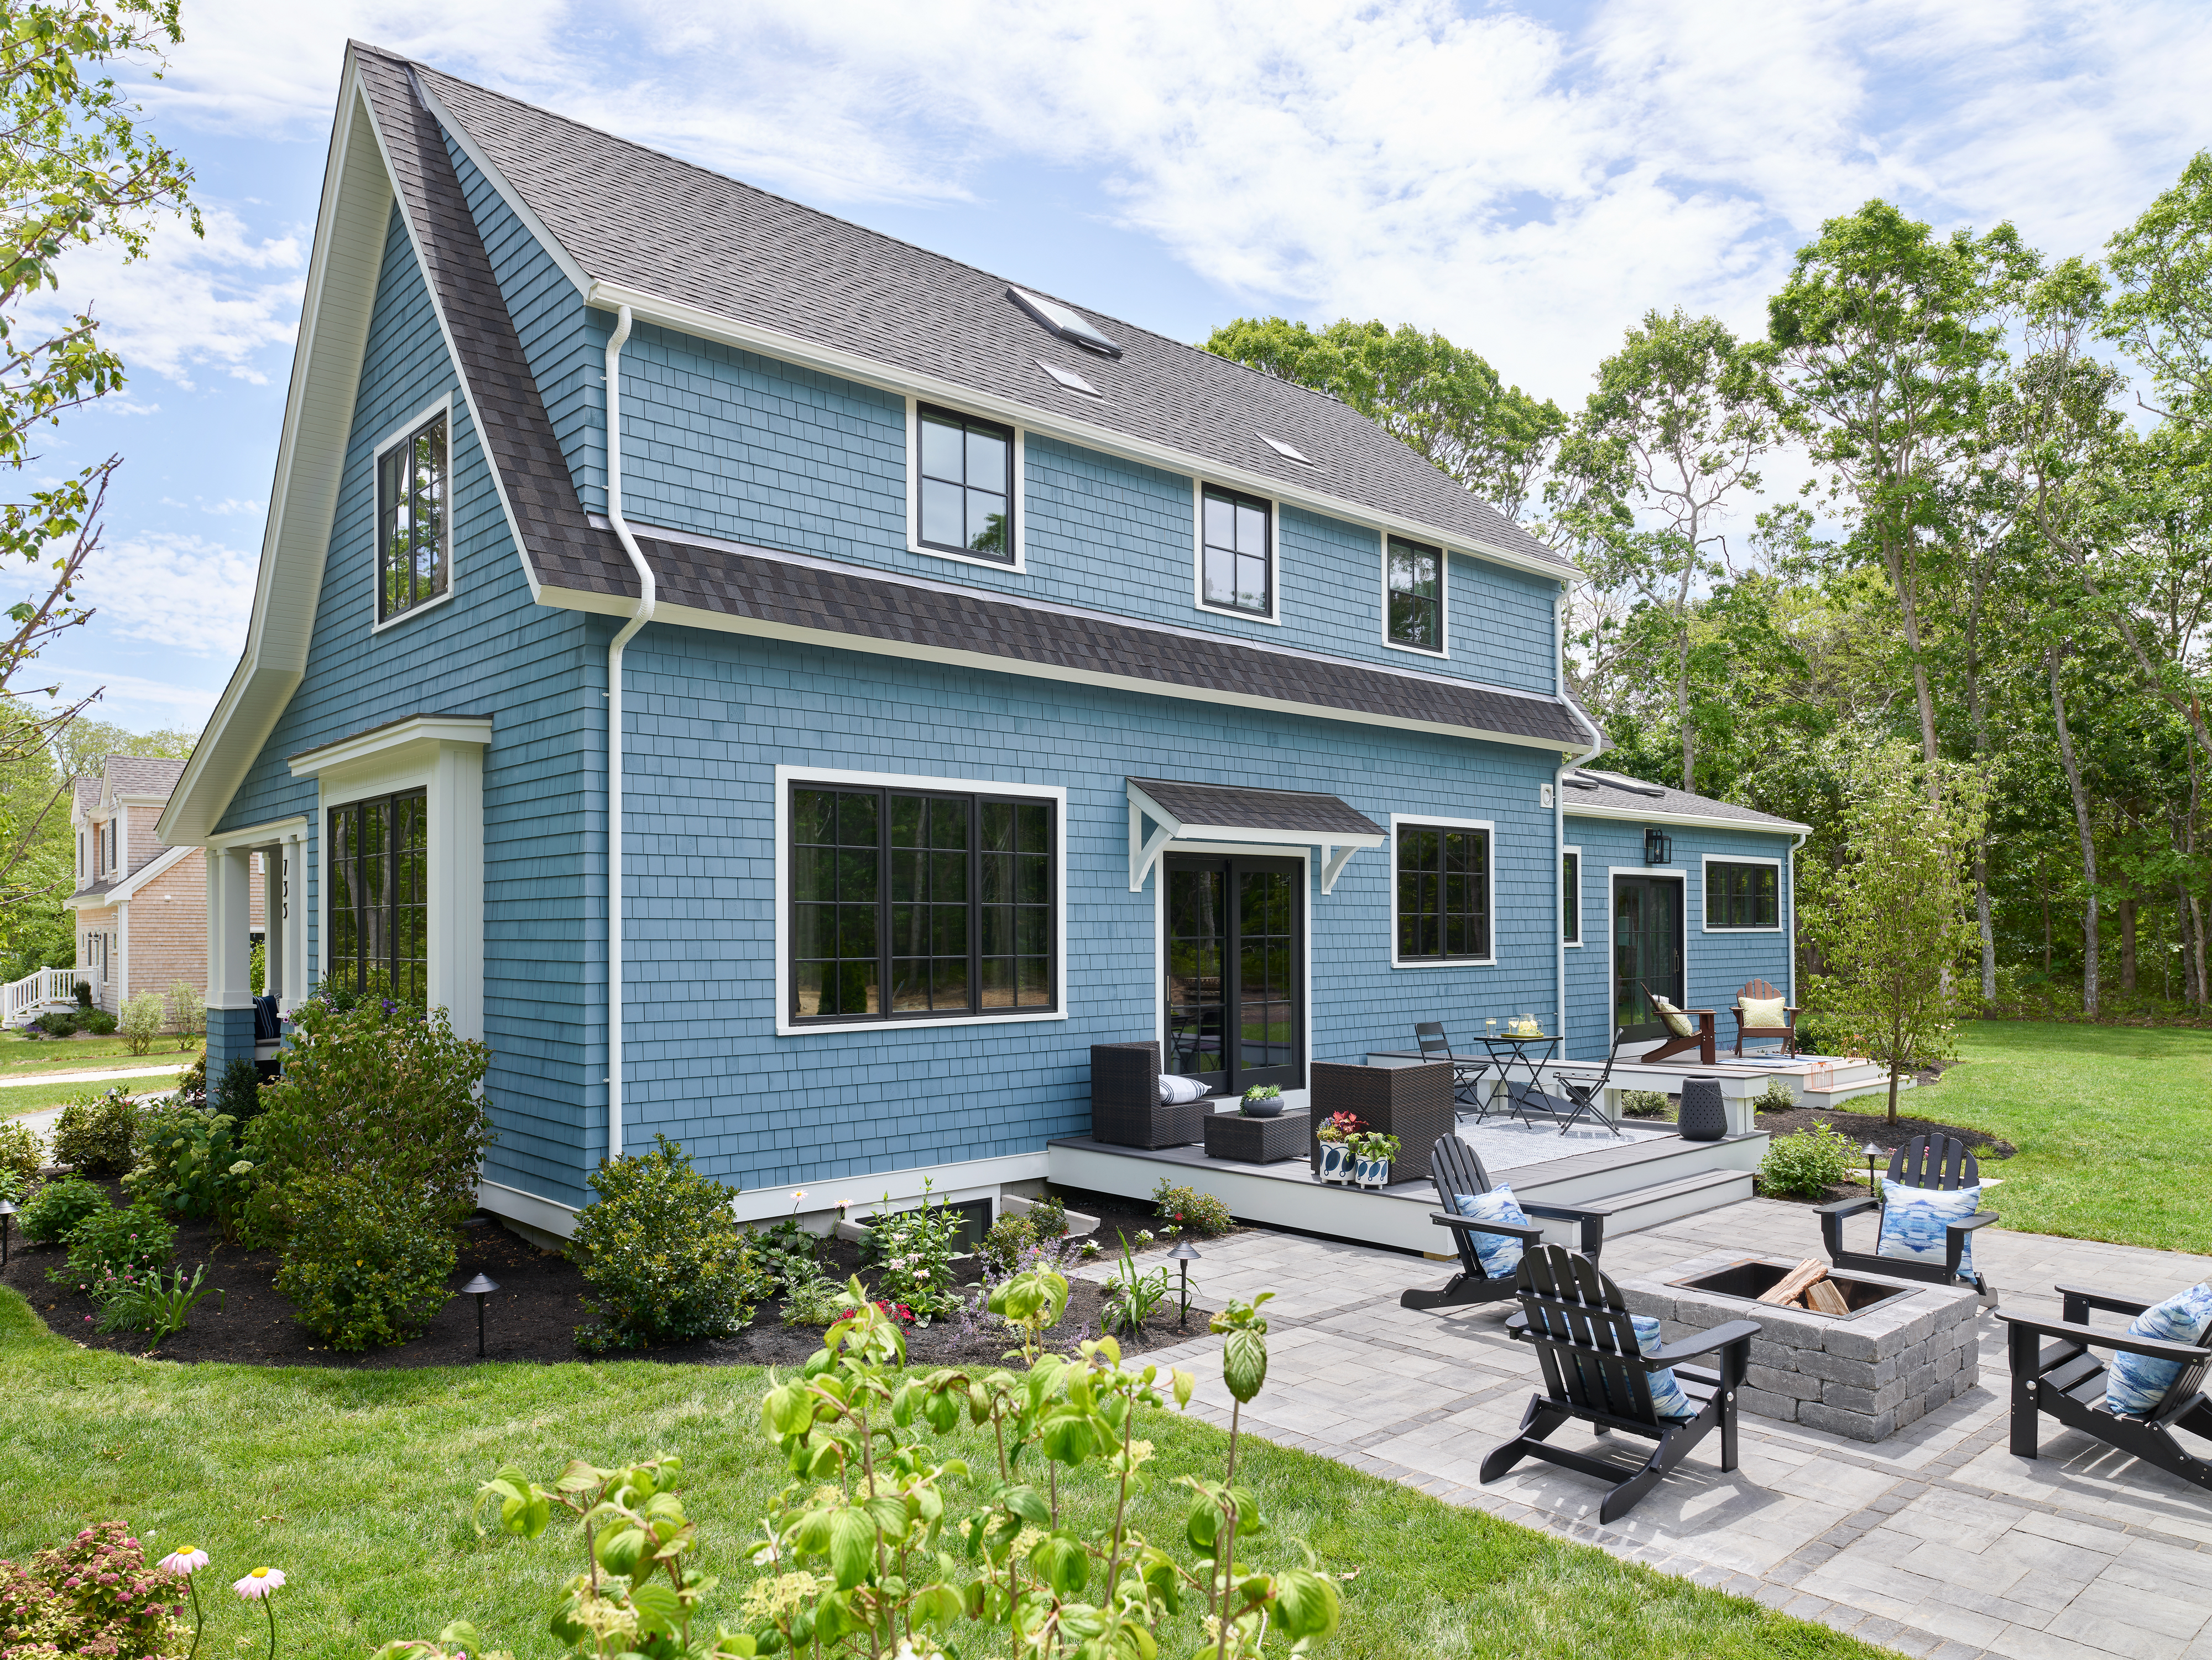 Cottage on the Cape, 2020 Idea House, Exterior, Lifespan